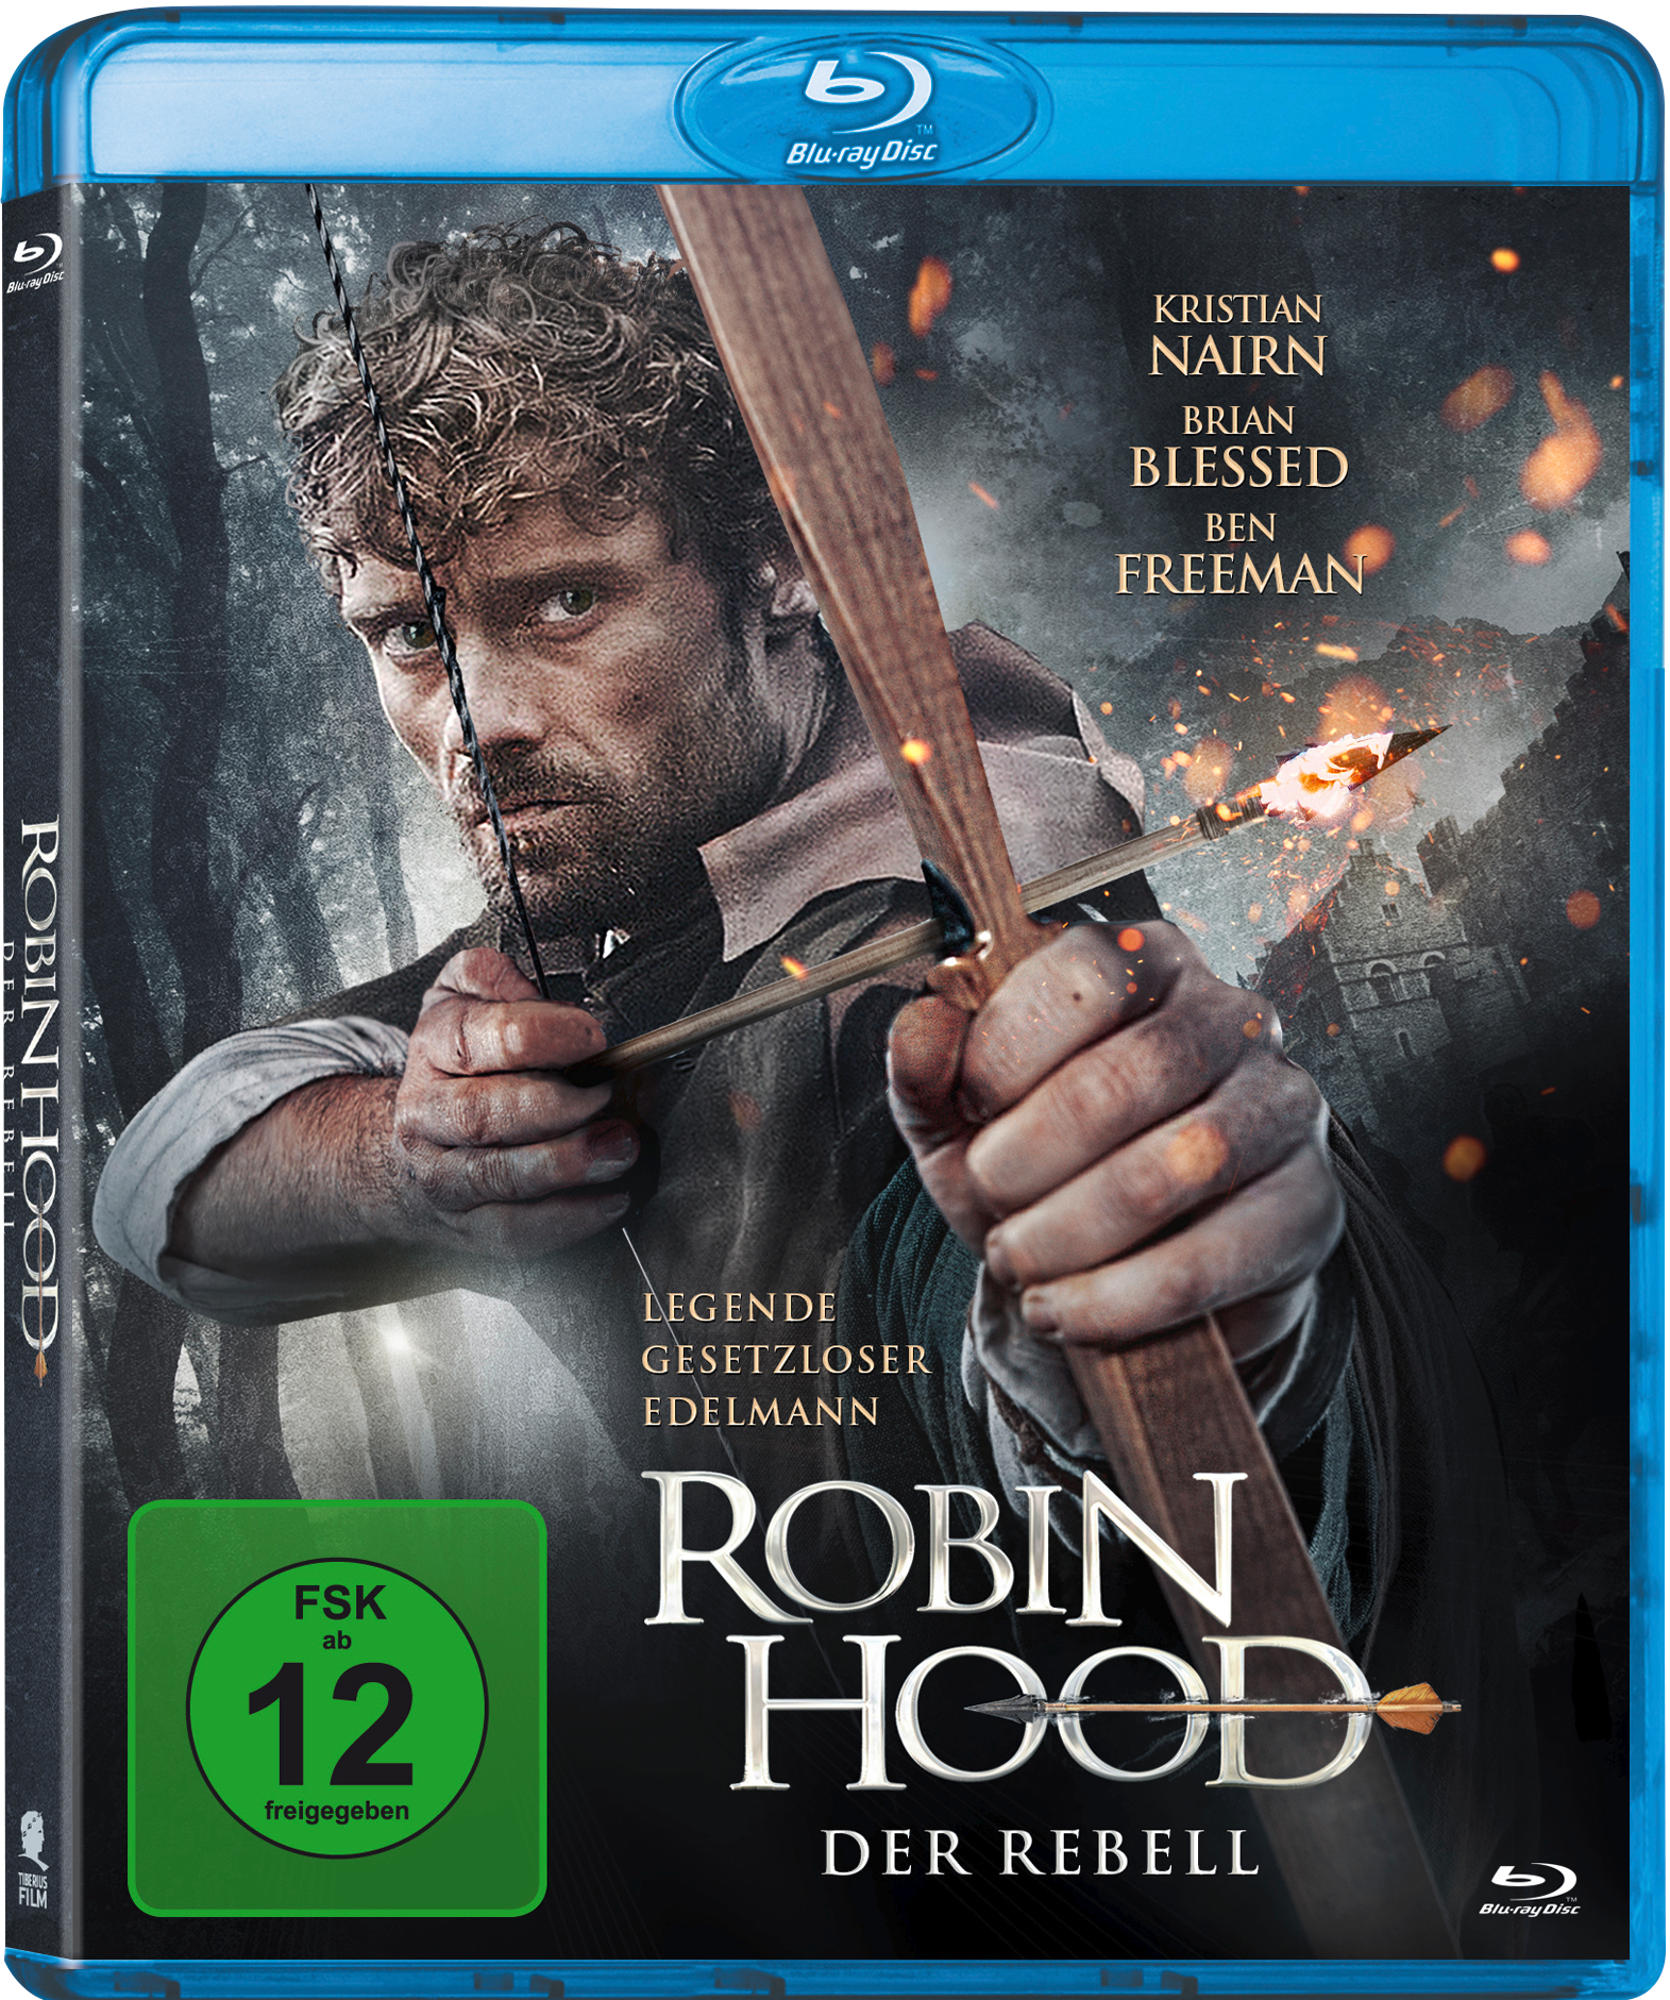 Hood Blu-ray Der Robin - Rebell